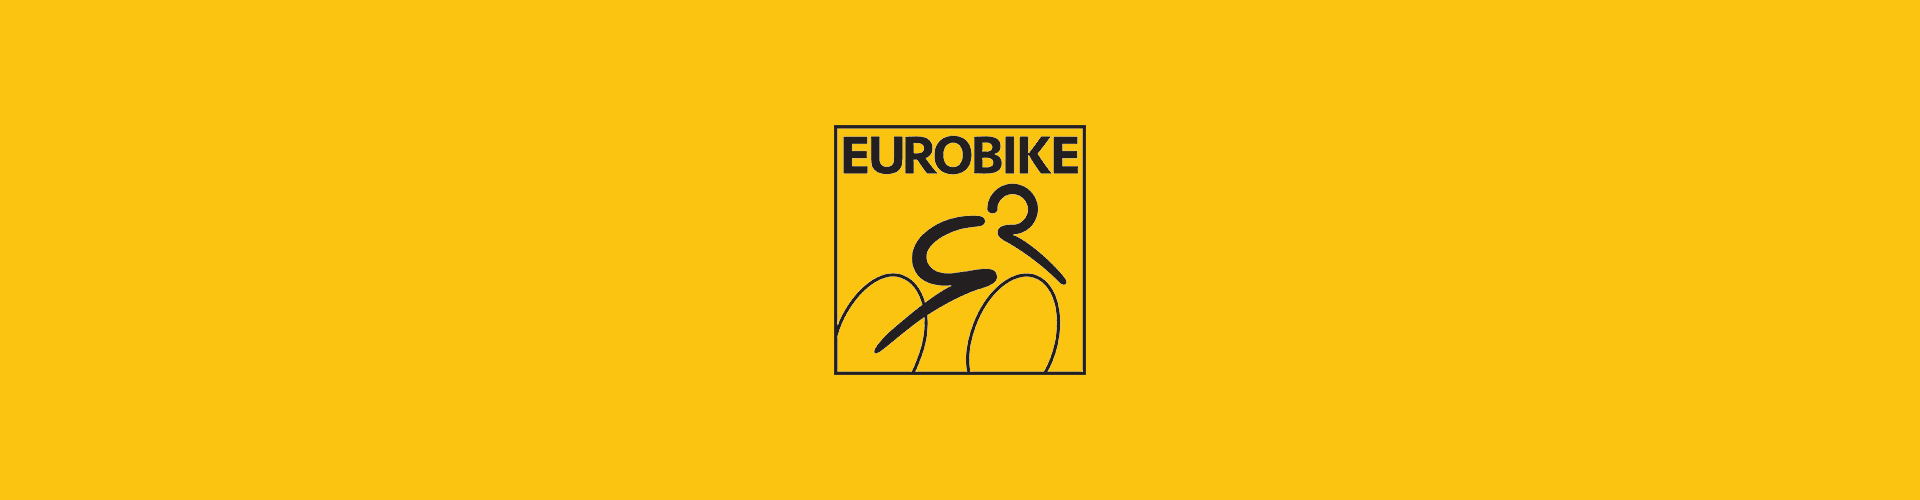 Eurobike - The Global Show